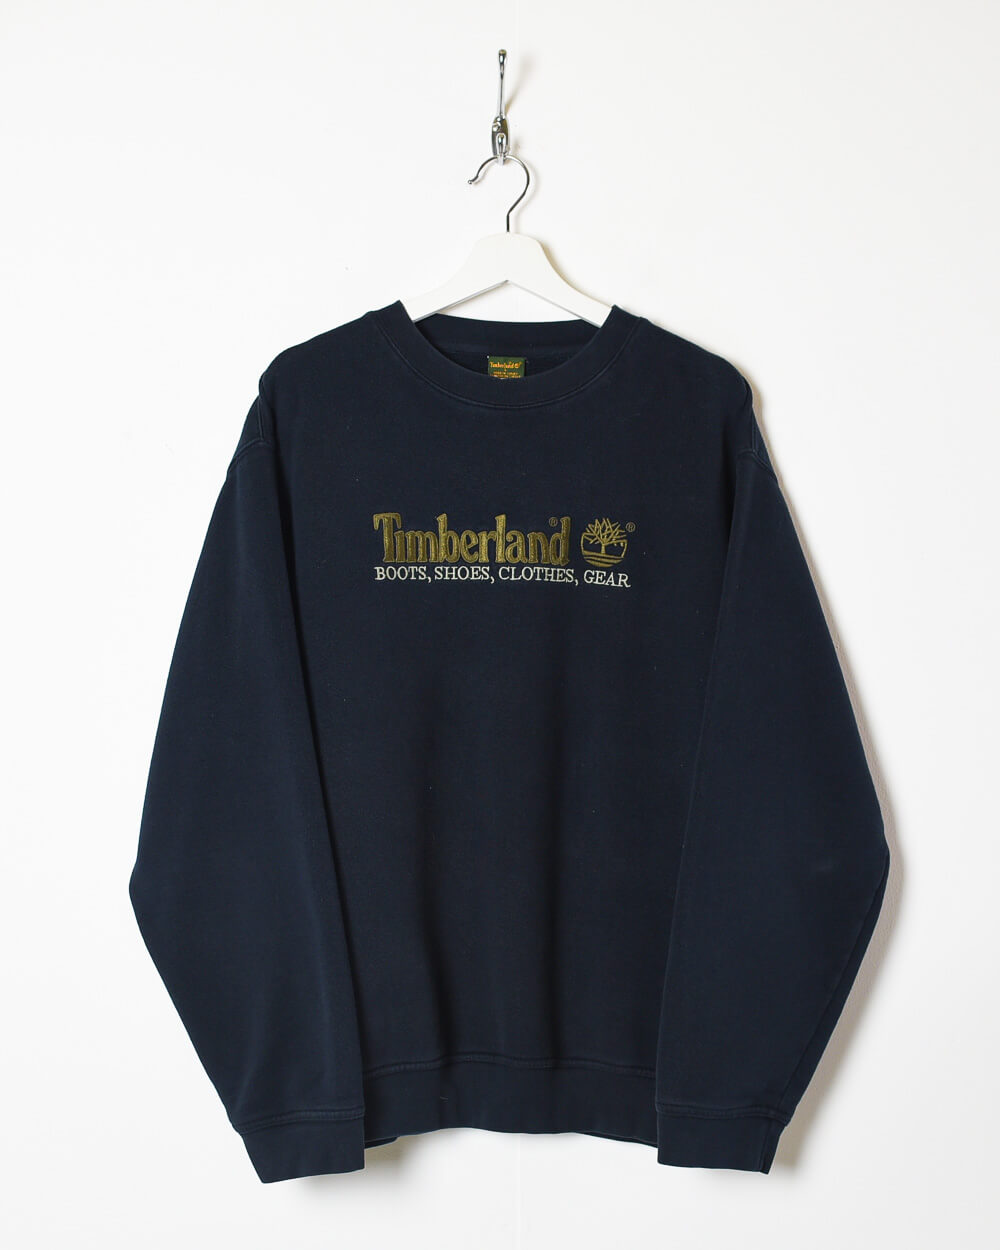 Navy Timberland Gear Sweatshirt - Large